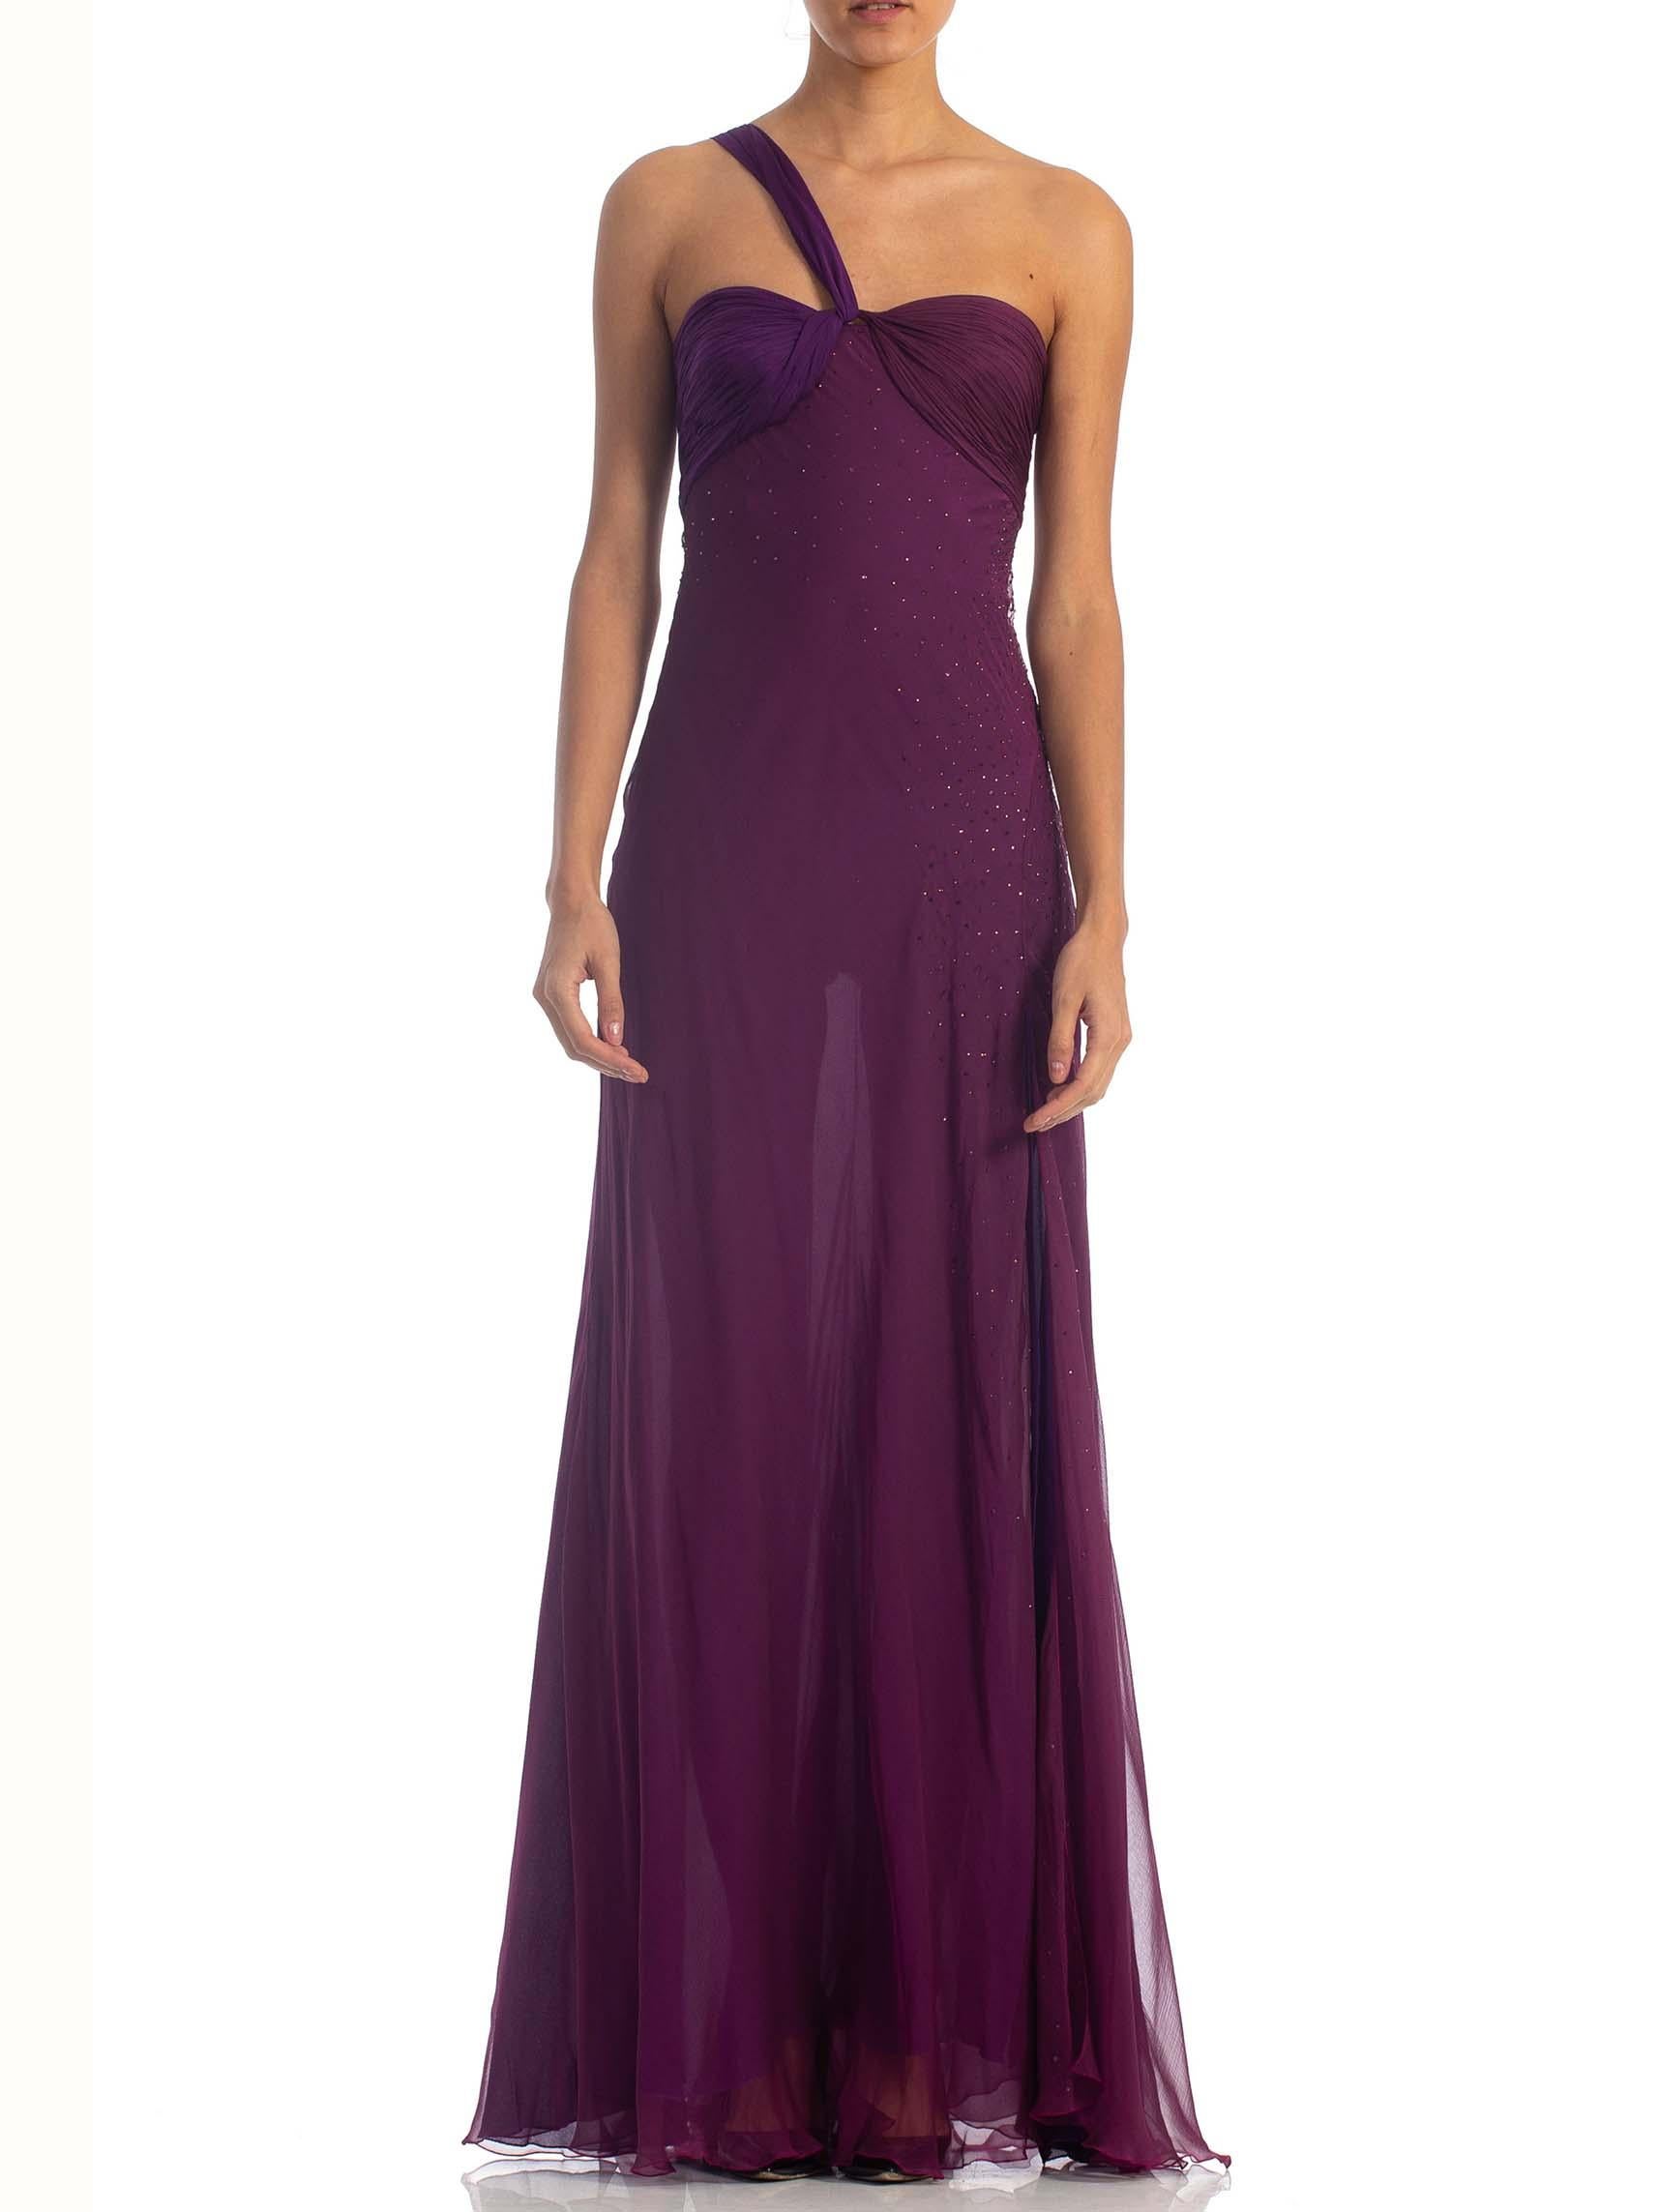 2000S DONATELLA VERSACE Purple Bias Cut Silk Chiffon Crystal Embelished Gown With High Slit